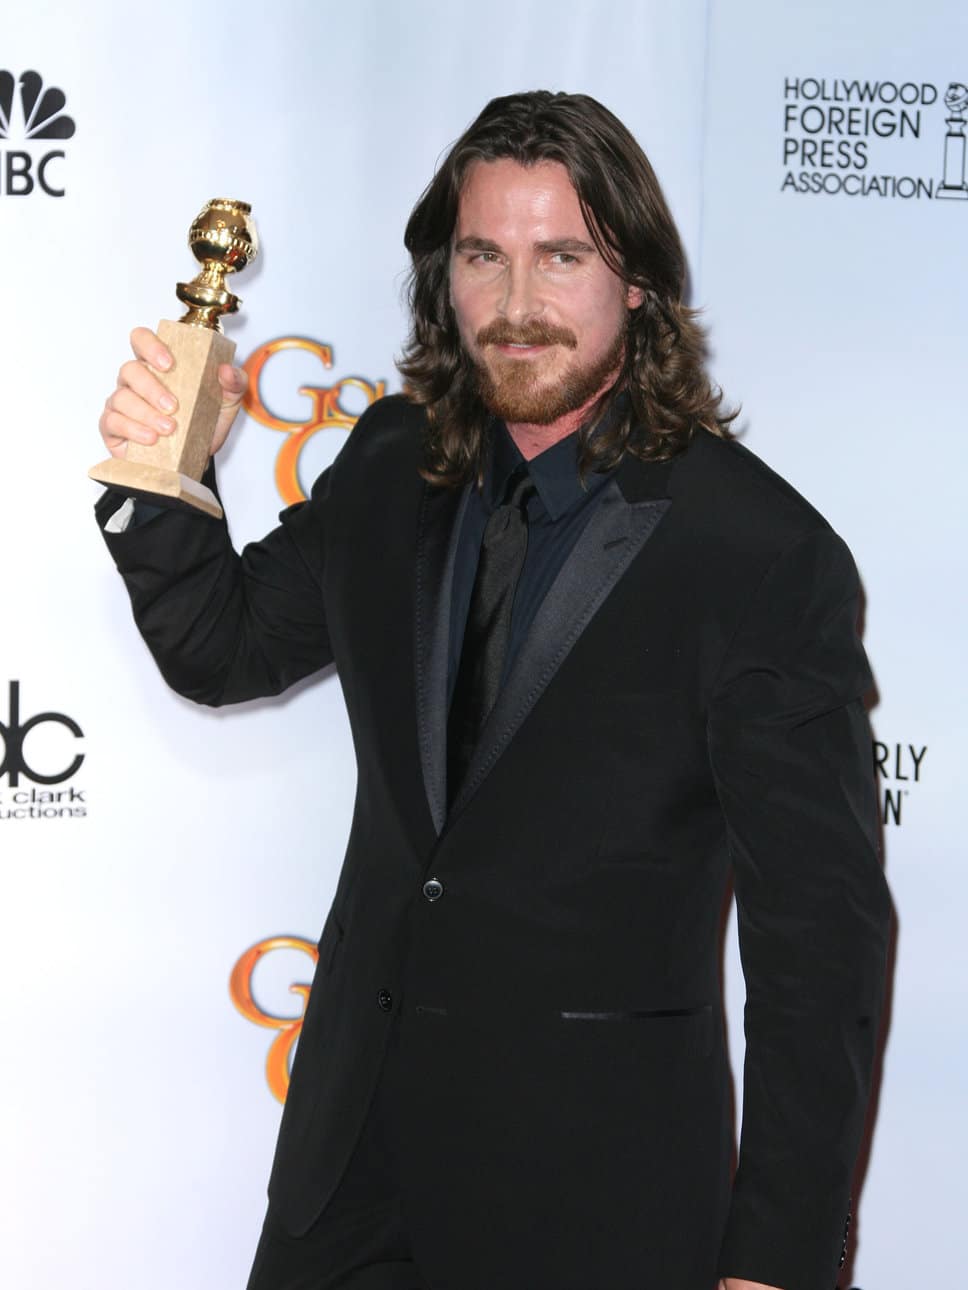 Christian Bale fappening leaks